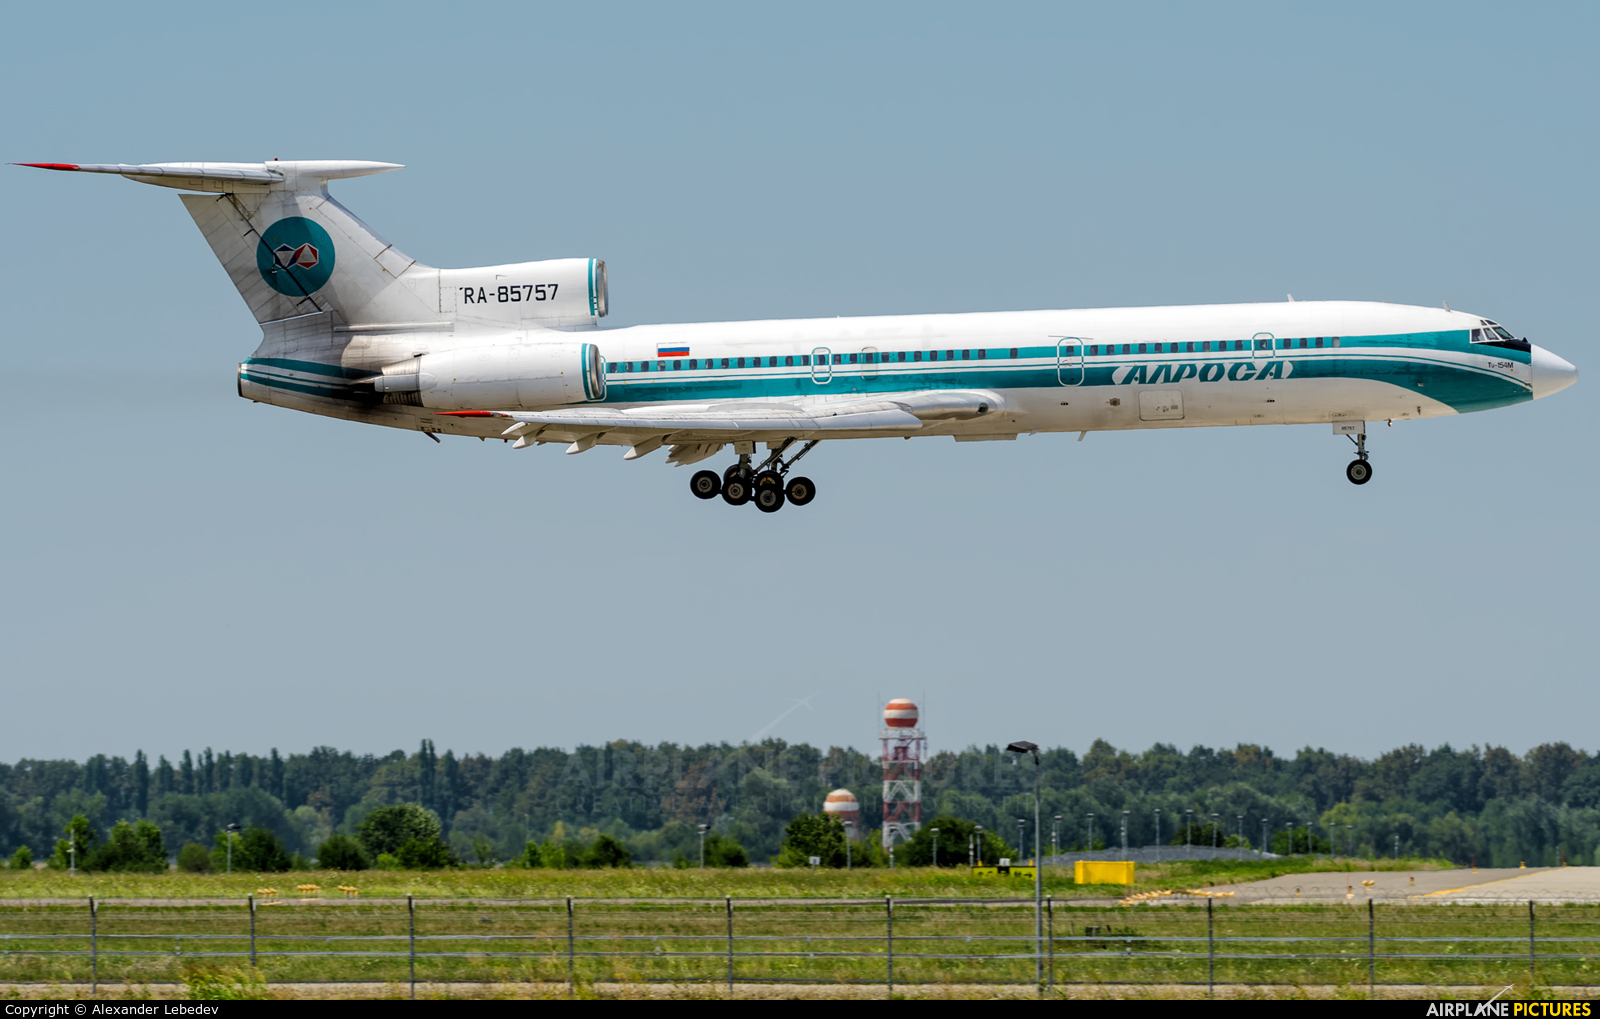 Alrosa RA-85757 aircraft at Krasnodar